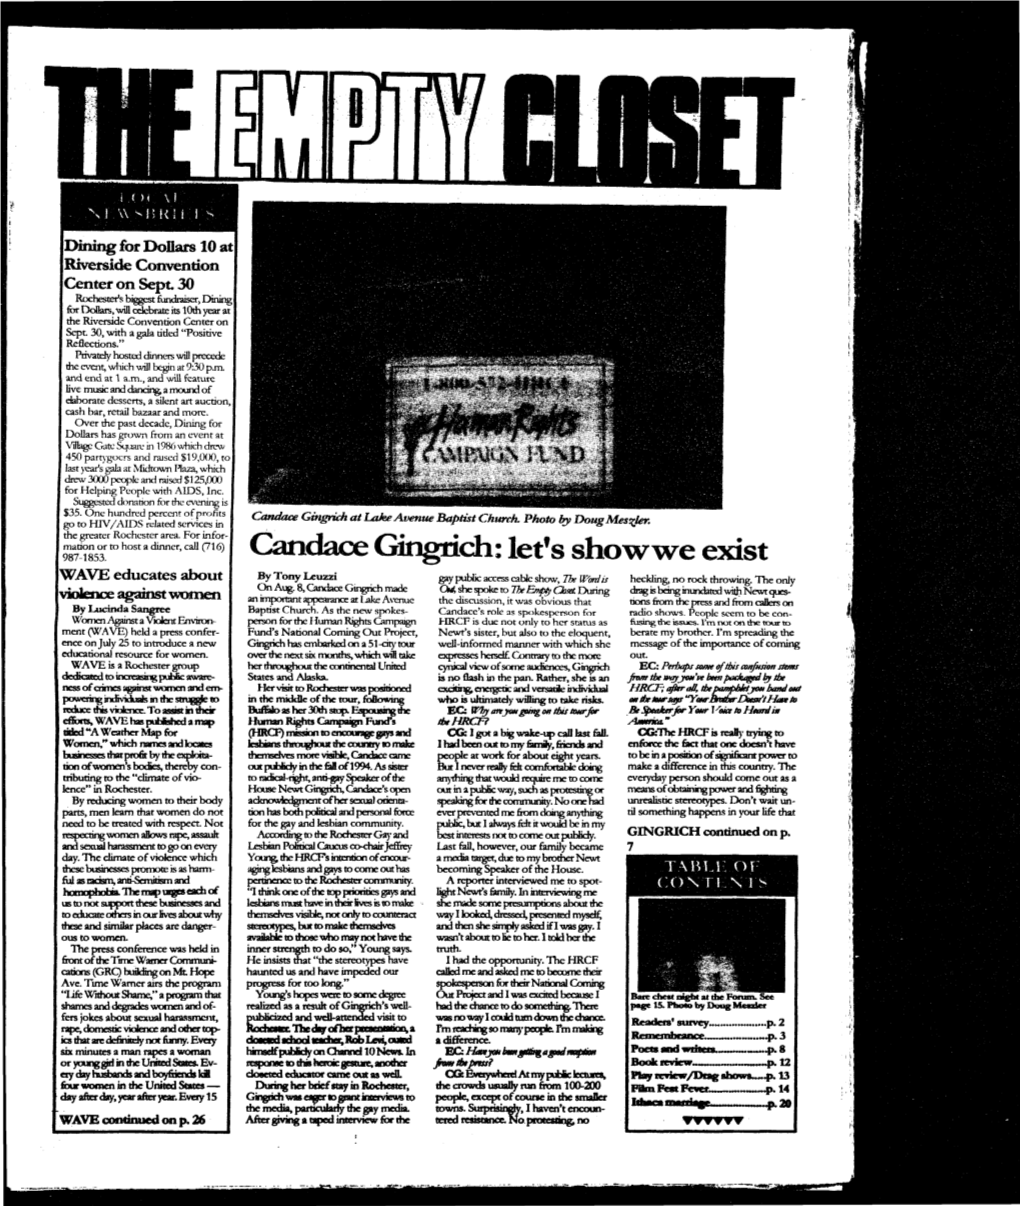 September 1995 Thsemptycks^ 3 2 Tbe Empiy Closet September 1995